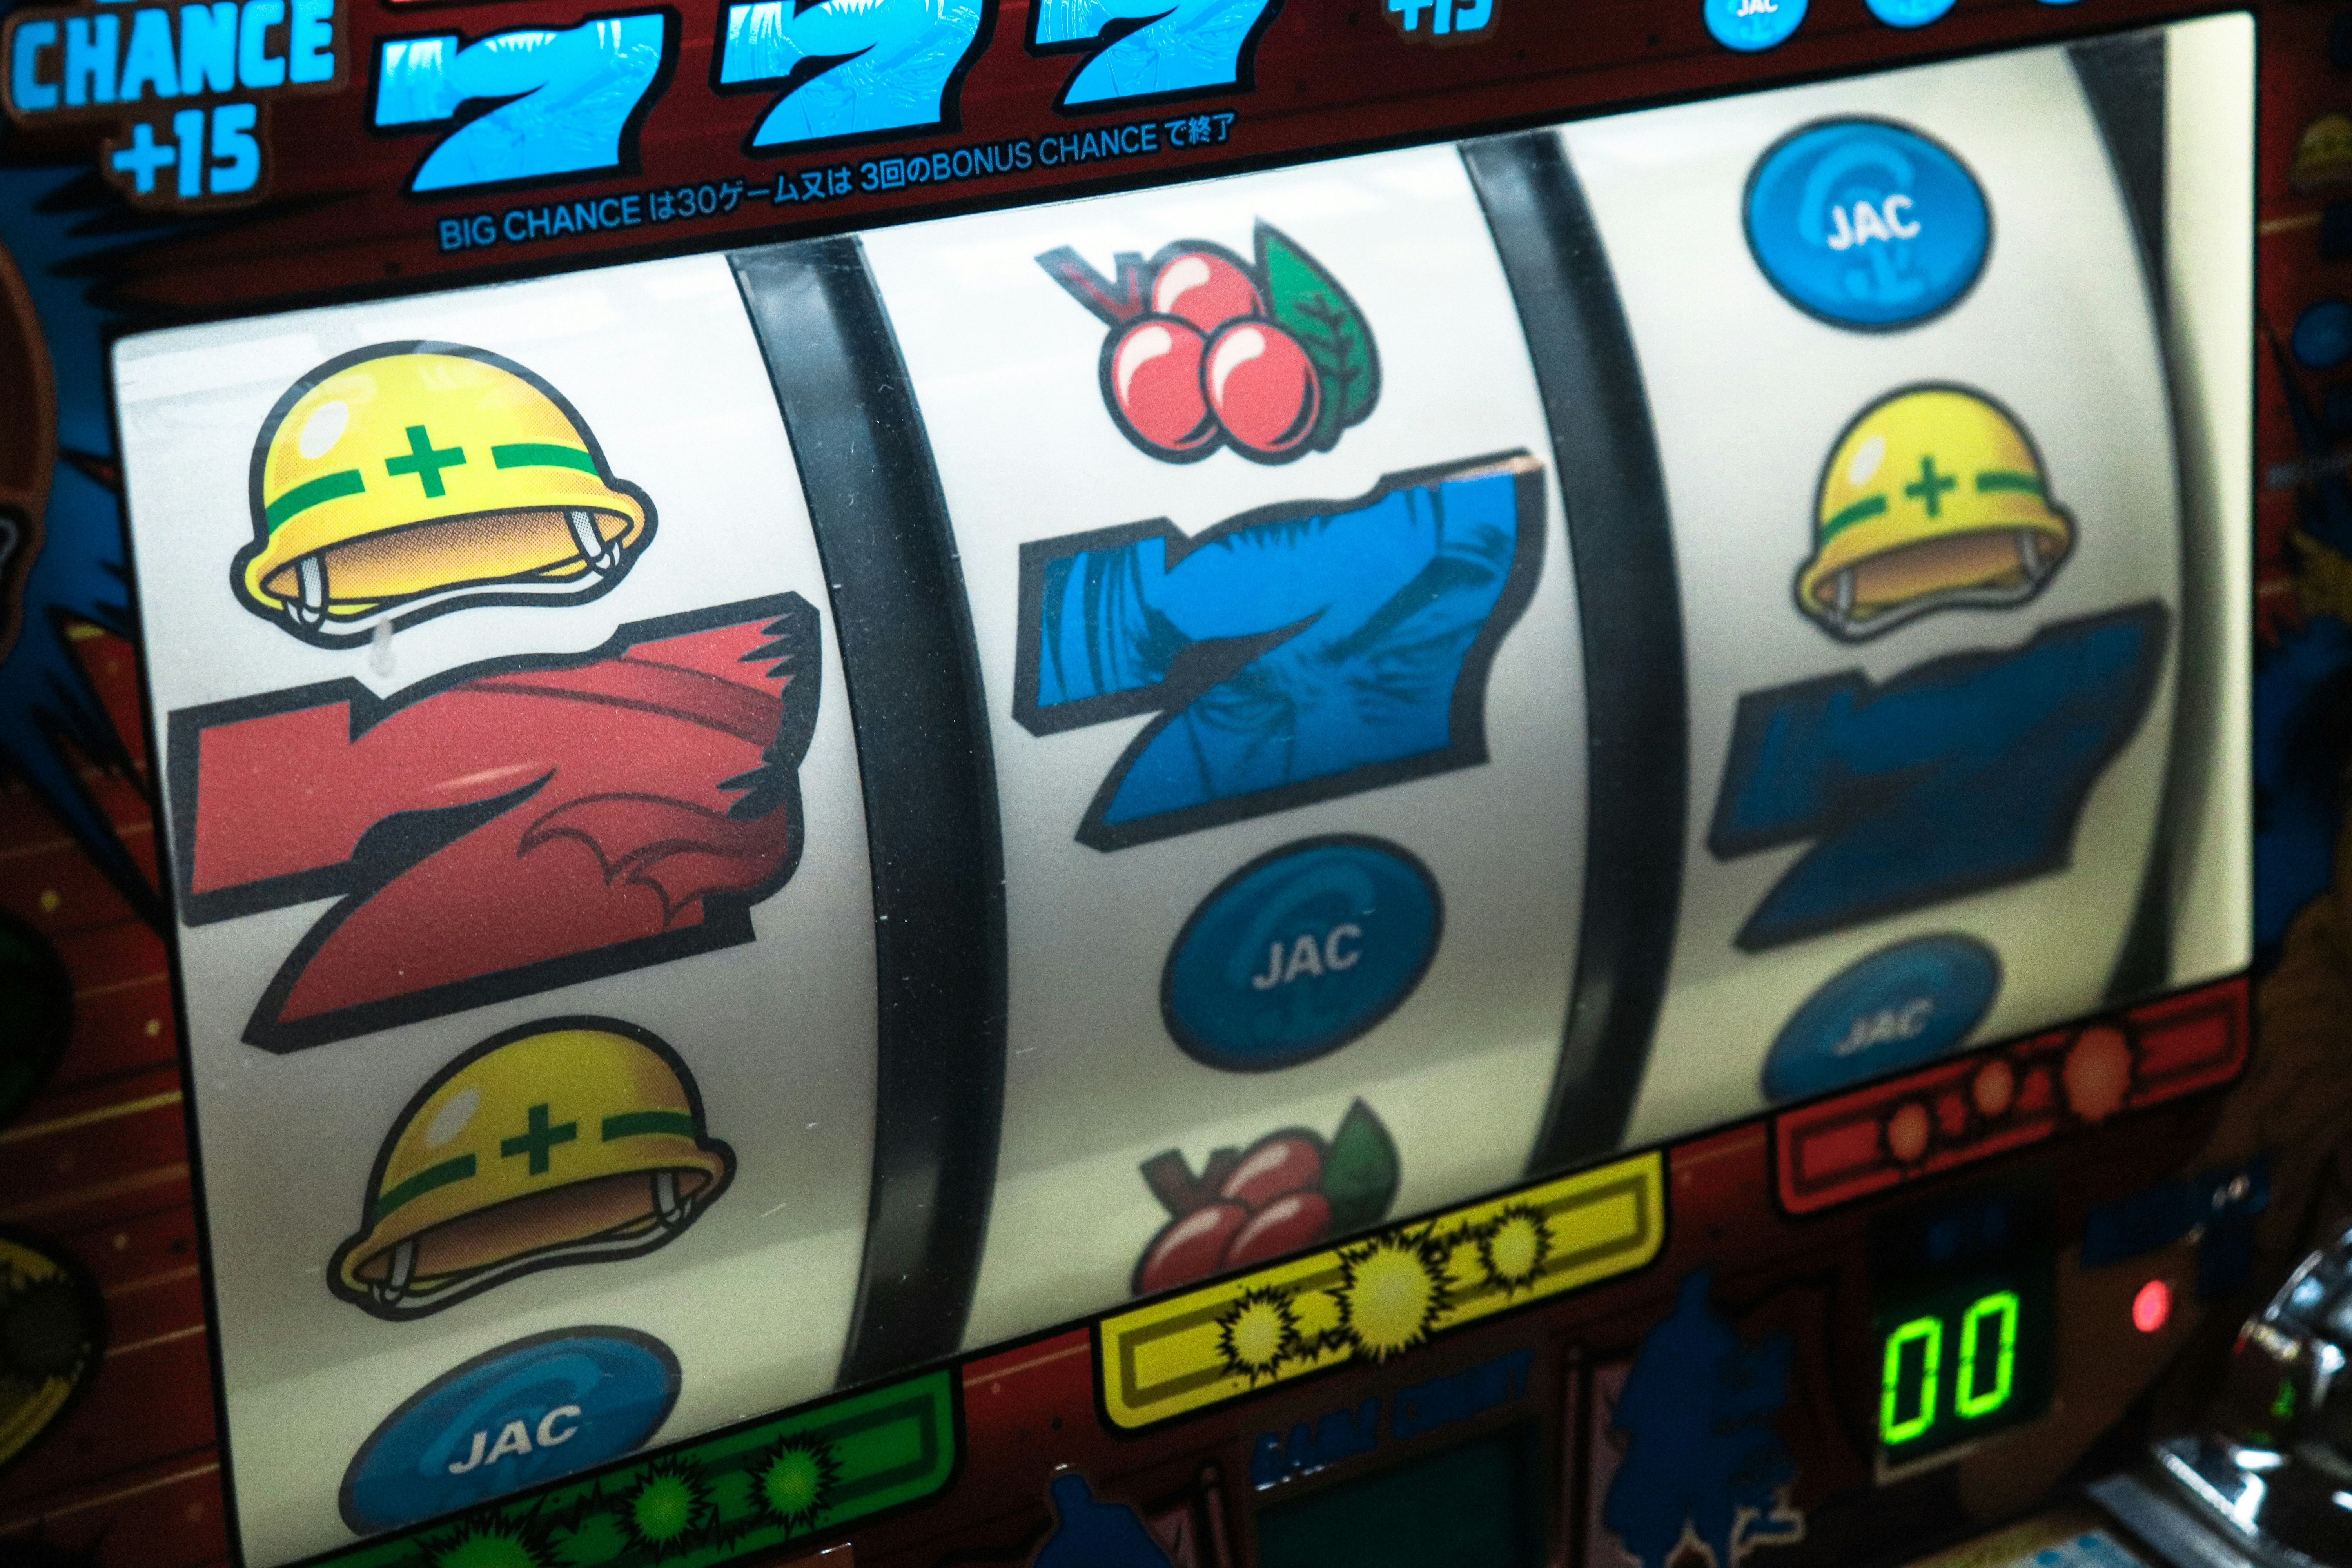 Javaslot88 Trustworthy Slot Online casinos